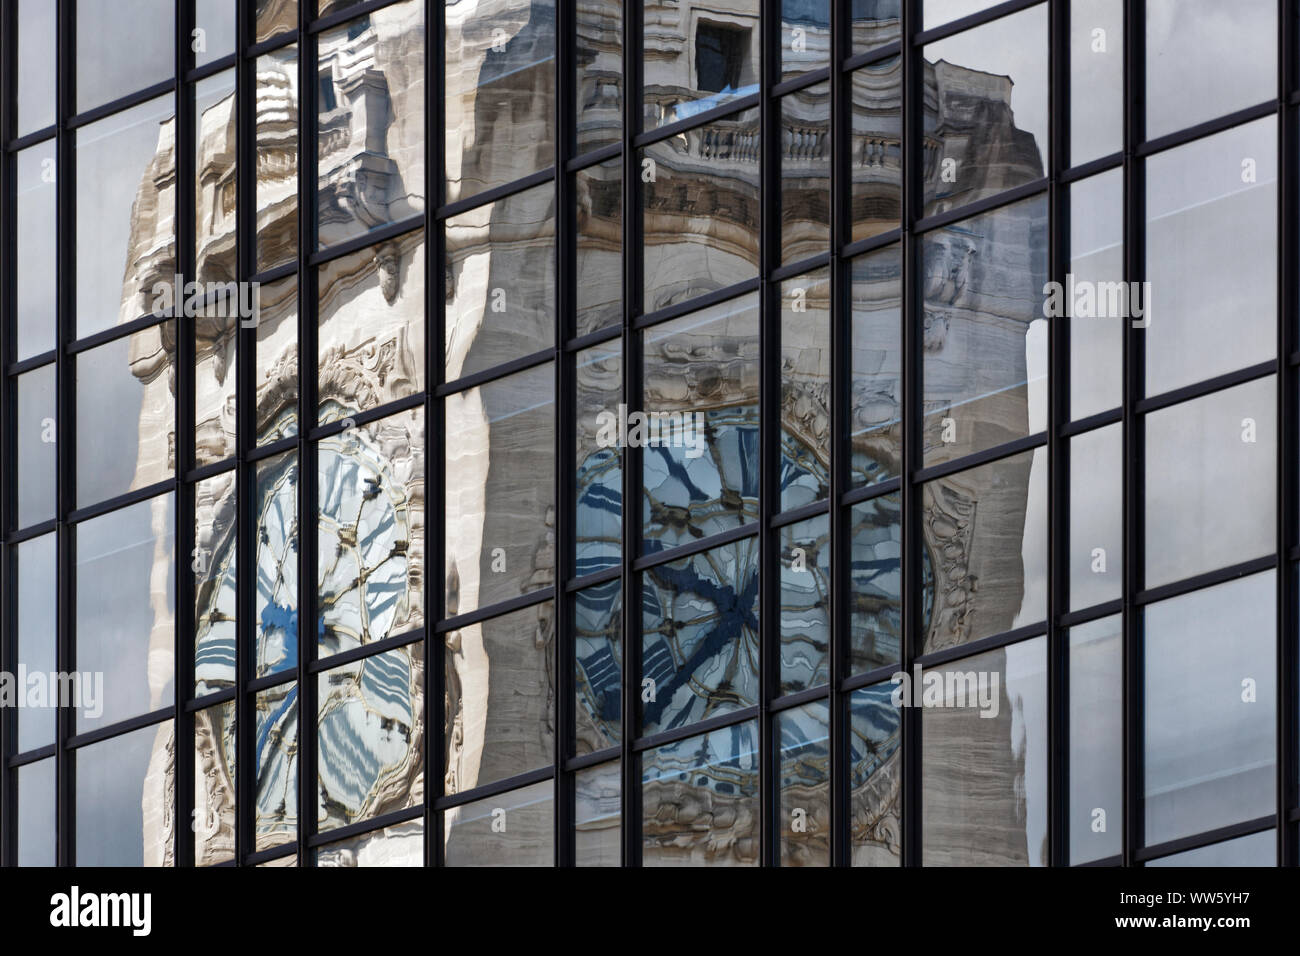 Francia, Paris, reloj, 9:38, la torre del reloj, reloj, desde aproximadamente 1900, la reflexión en frente de vidrio Foto de stock